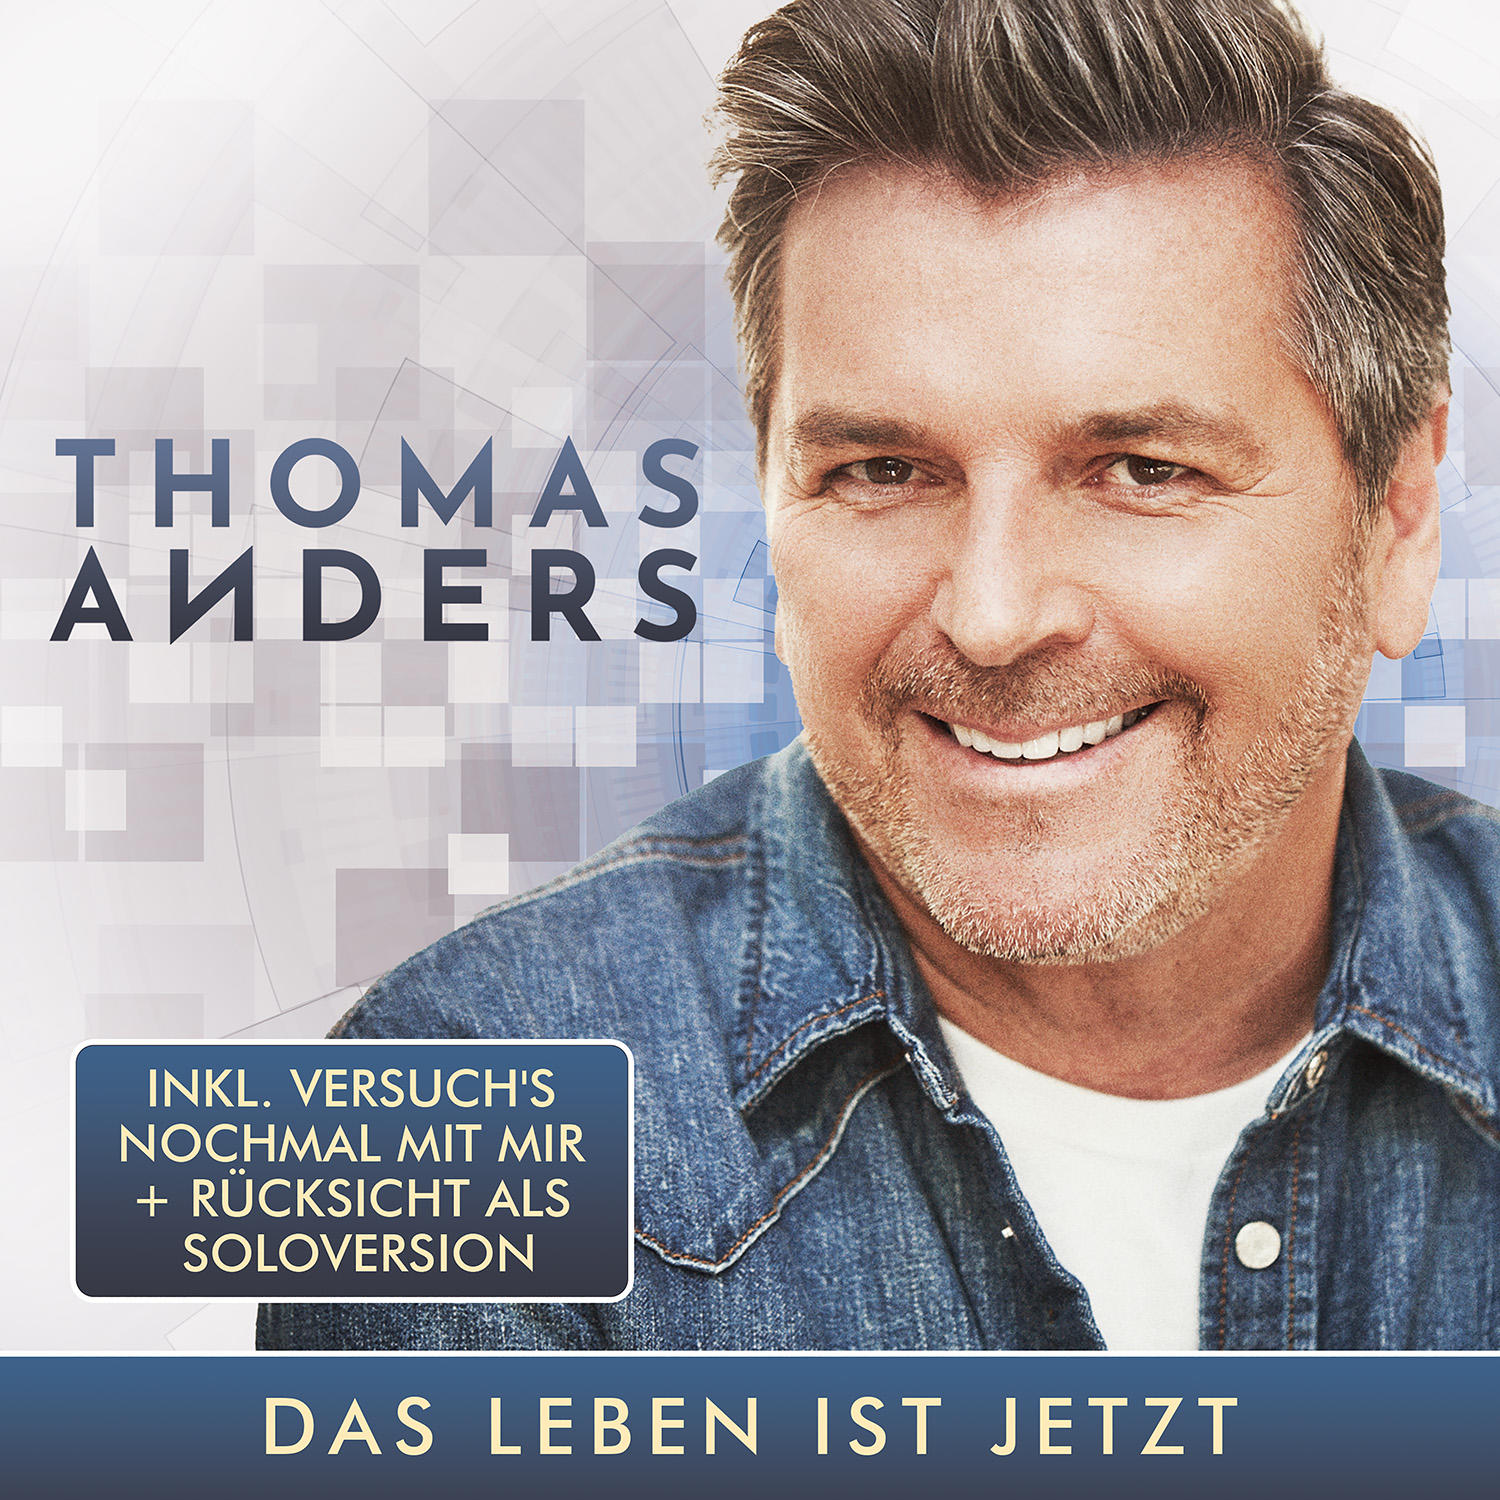 Thomas Anders ist Leben - Das (CD) jetzt 